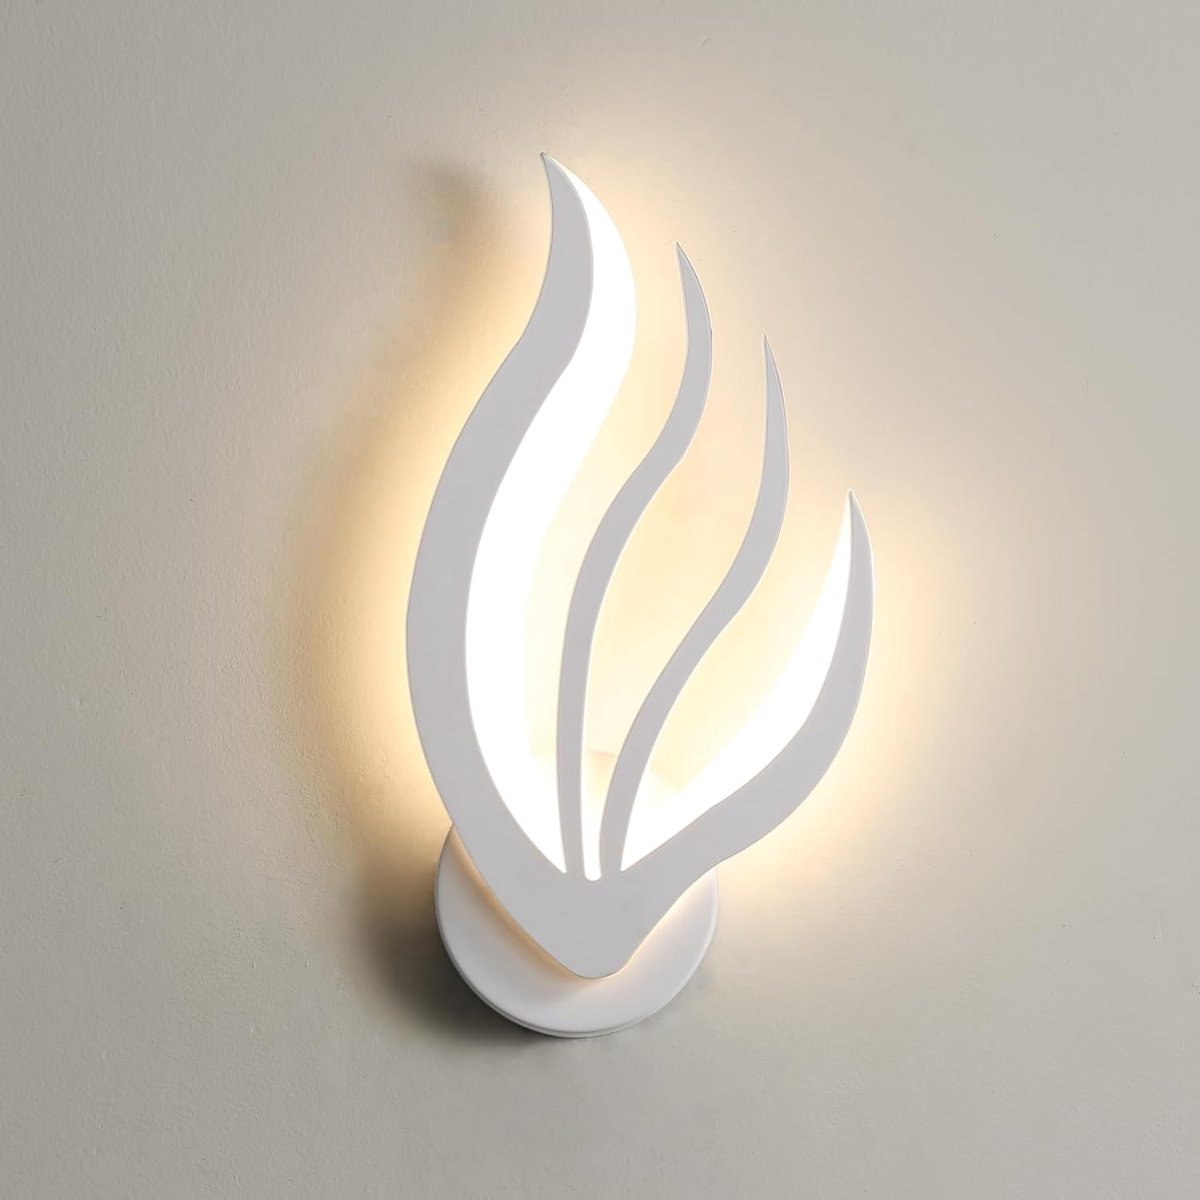 Goeco Wandlamp - 36cm - Medium - LED - 15W - Vlamvorm - 3000K - Acryl